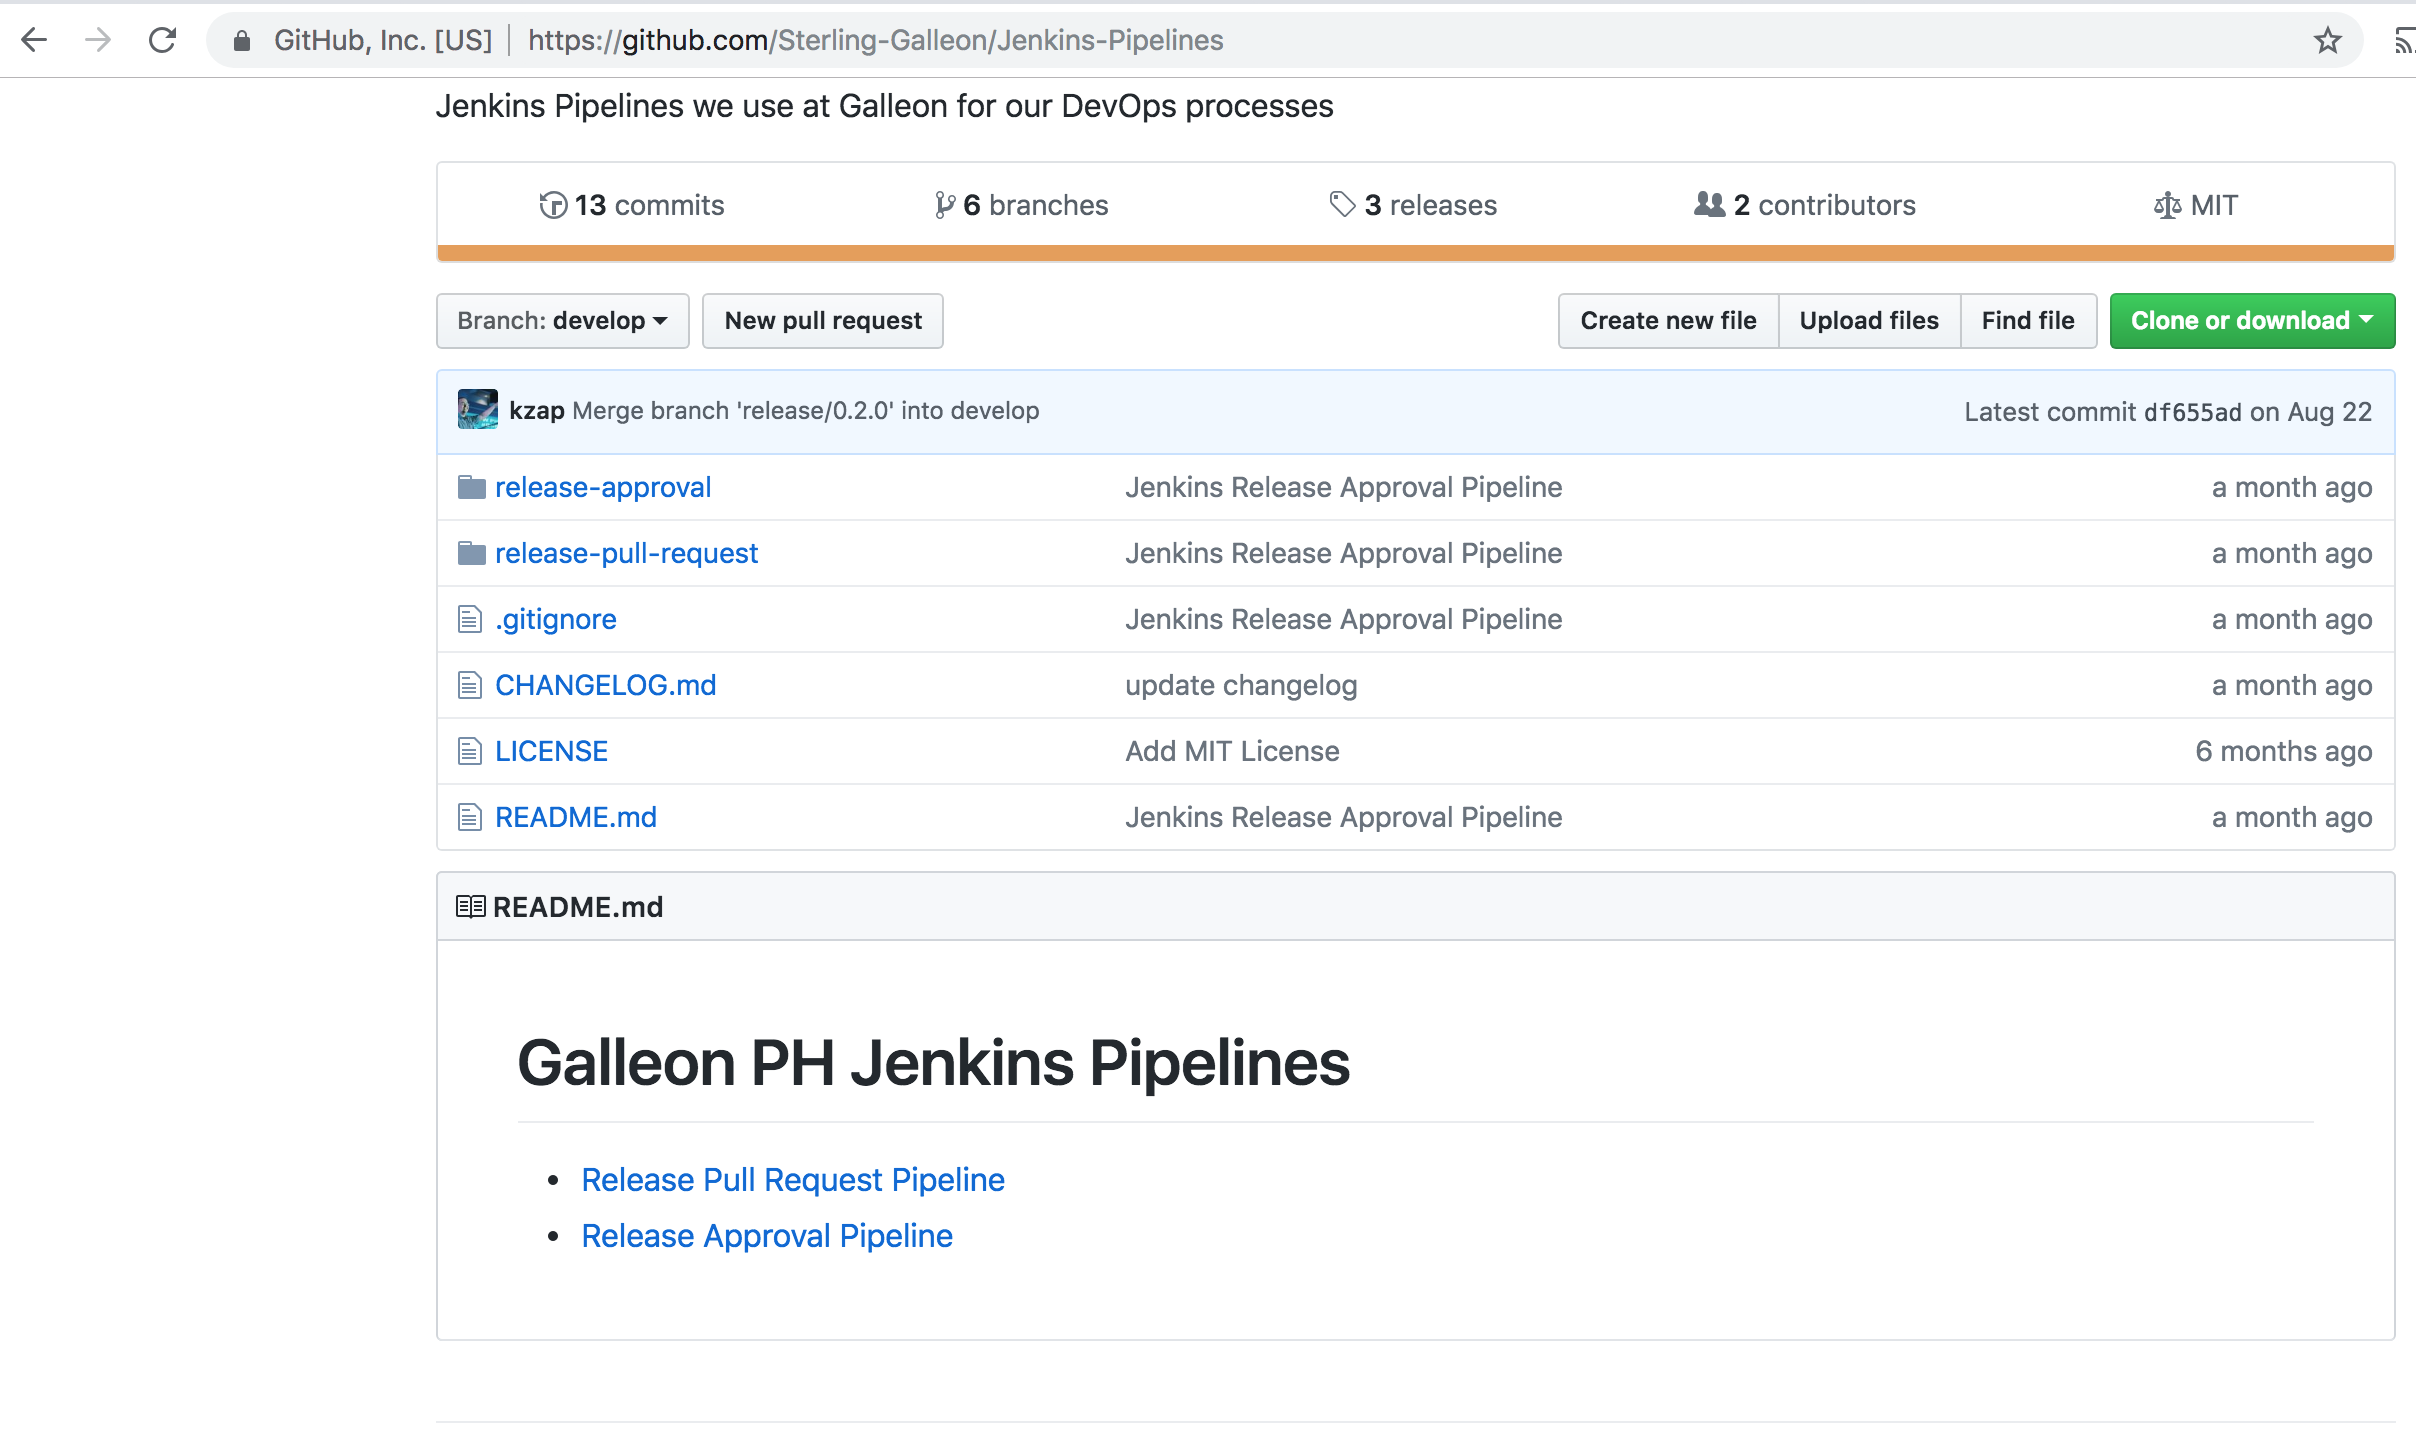 Galleon.PH Jenkins Pipelines